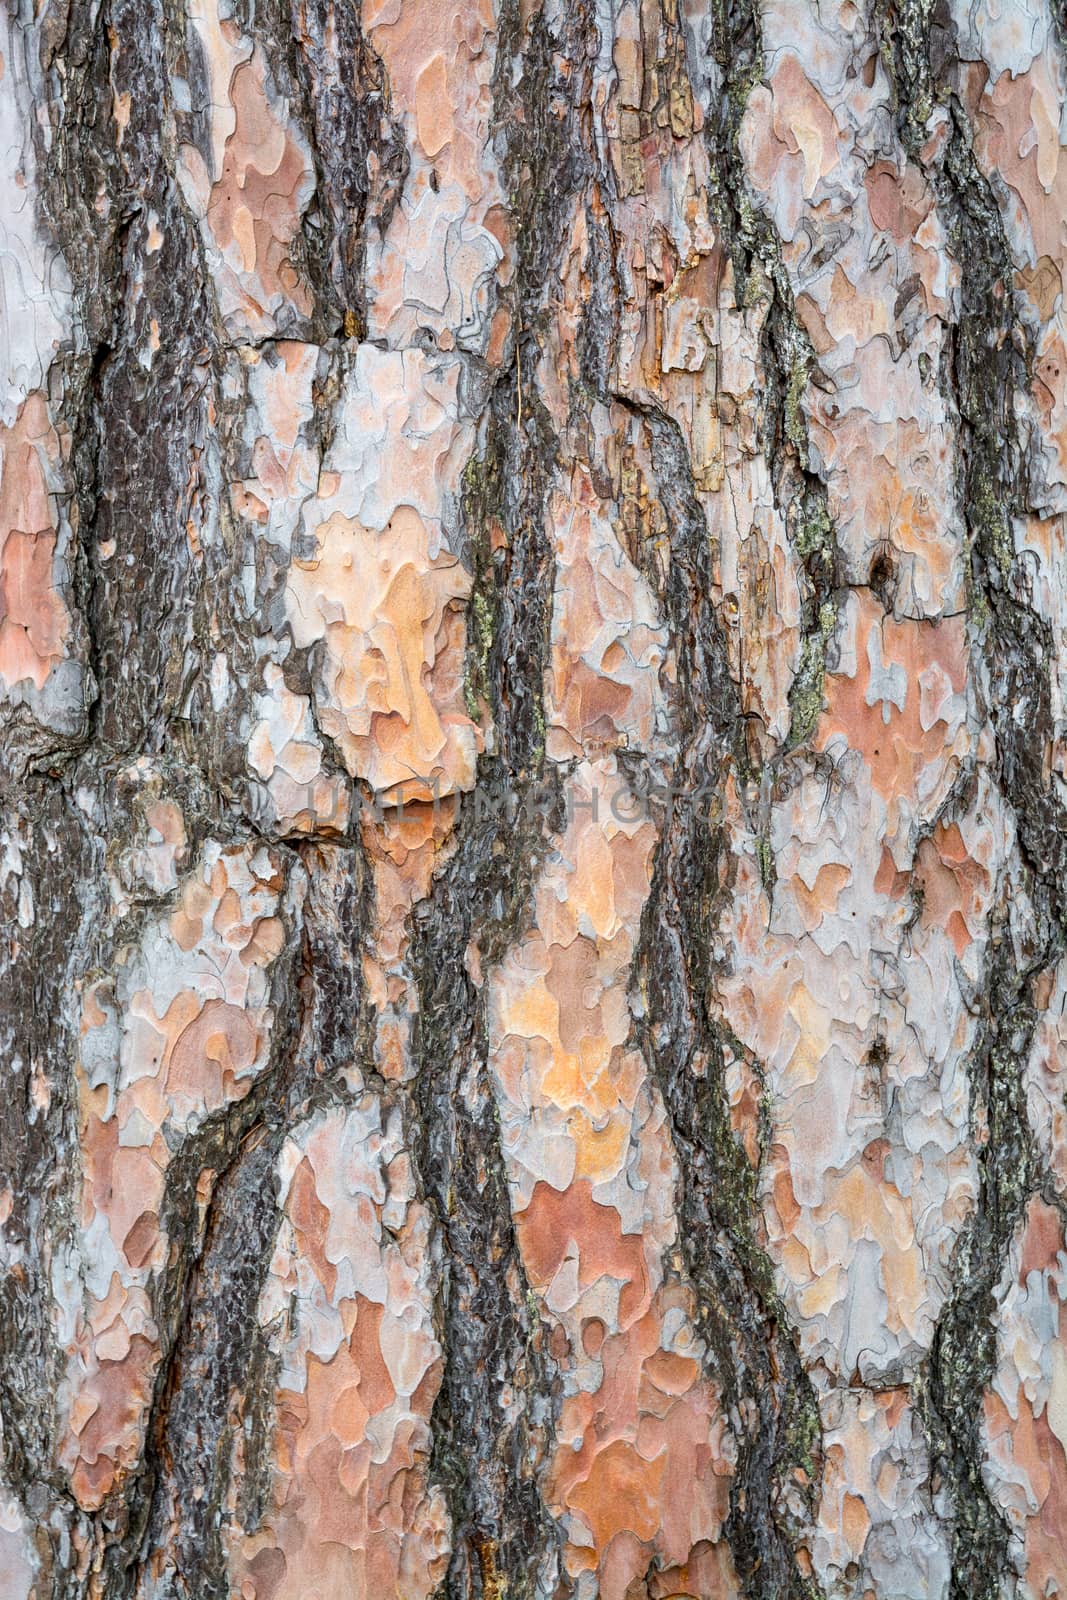 Bark texture background Scots pine vertical image.